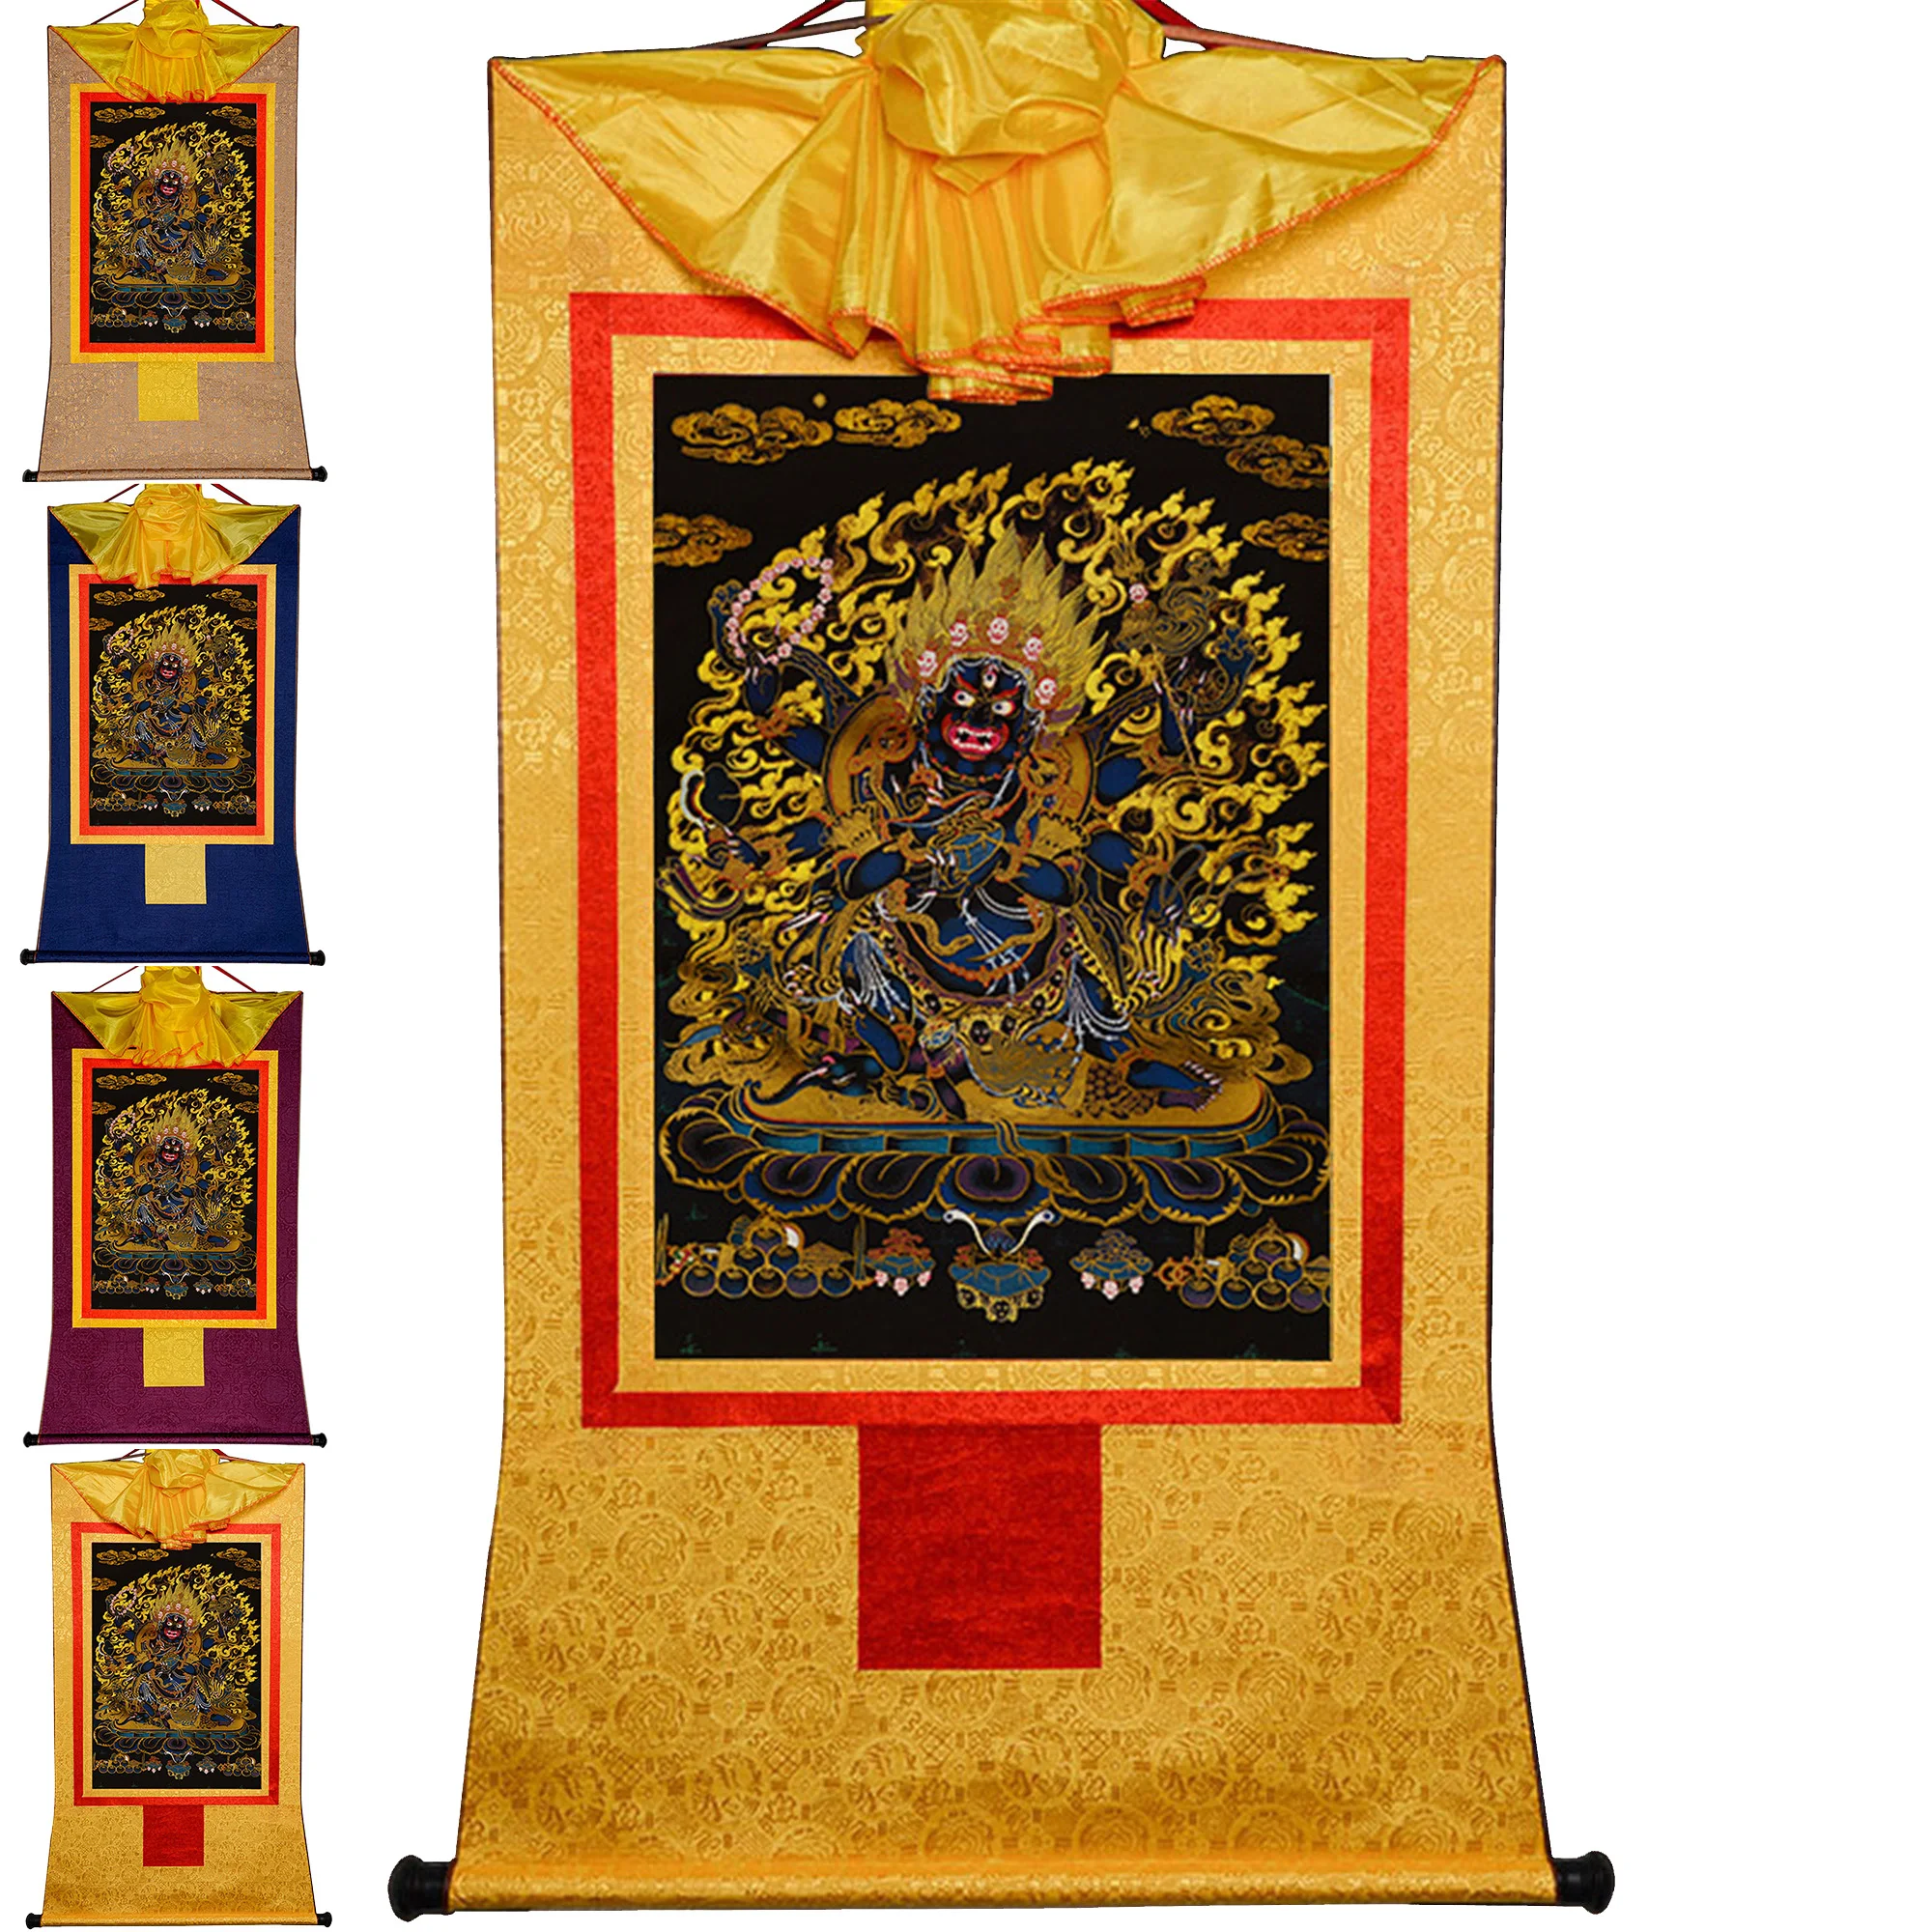 

Gandhanra Tibetan Thangka Painting Art,Mahakala,Protector Deity,Thangka Tapestry Wall Art with Scroll, Meditation Zen Home Decor